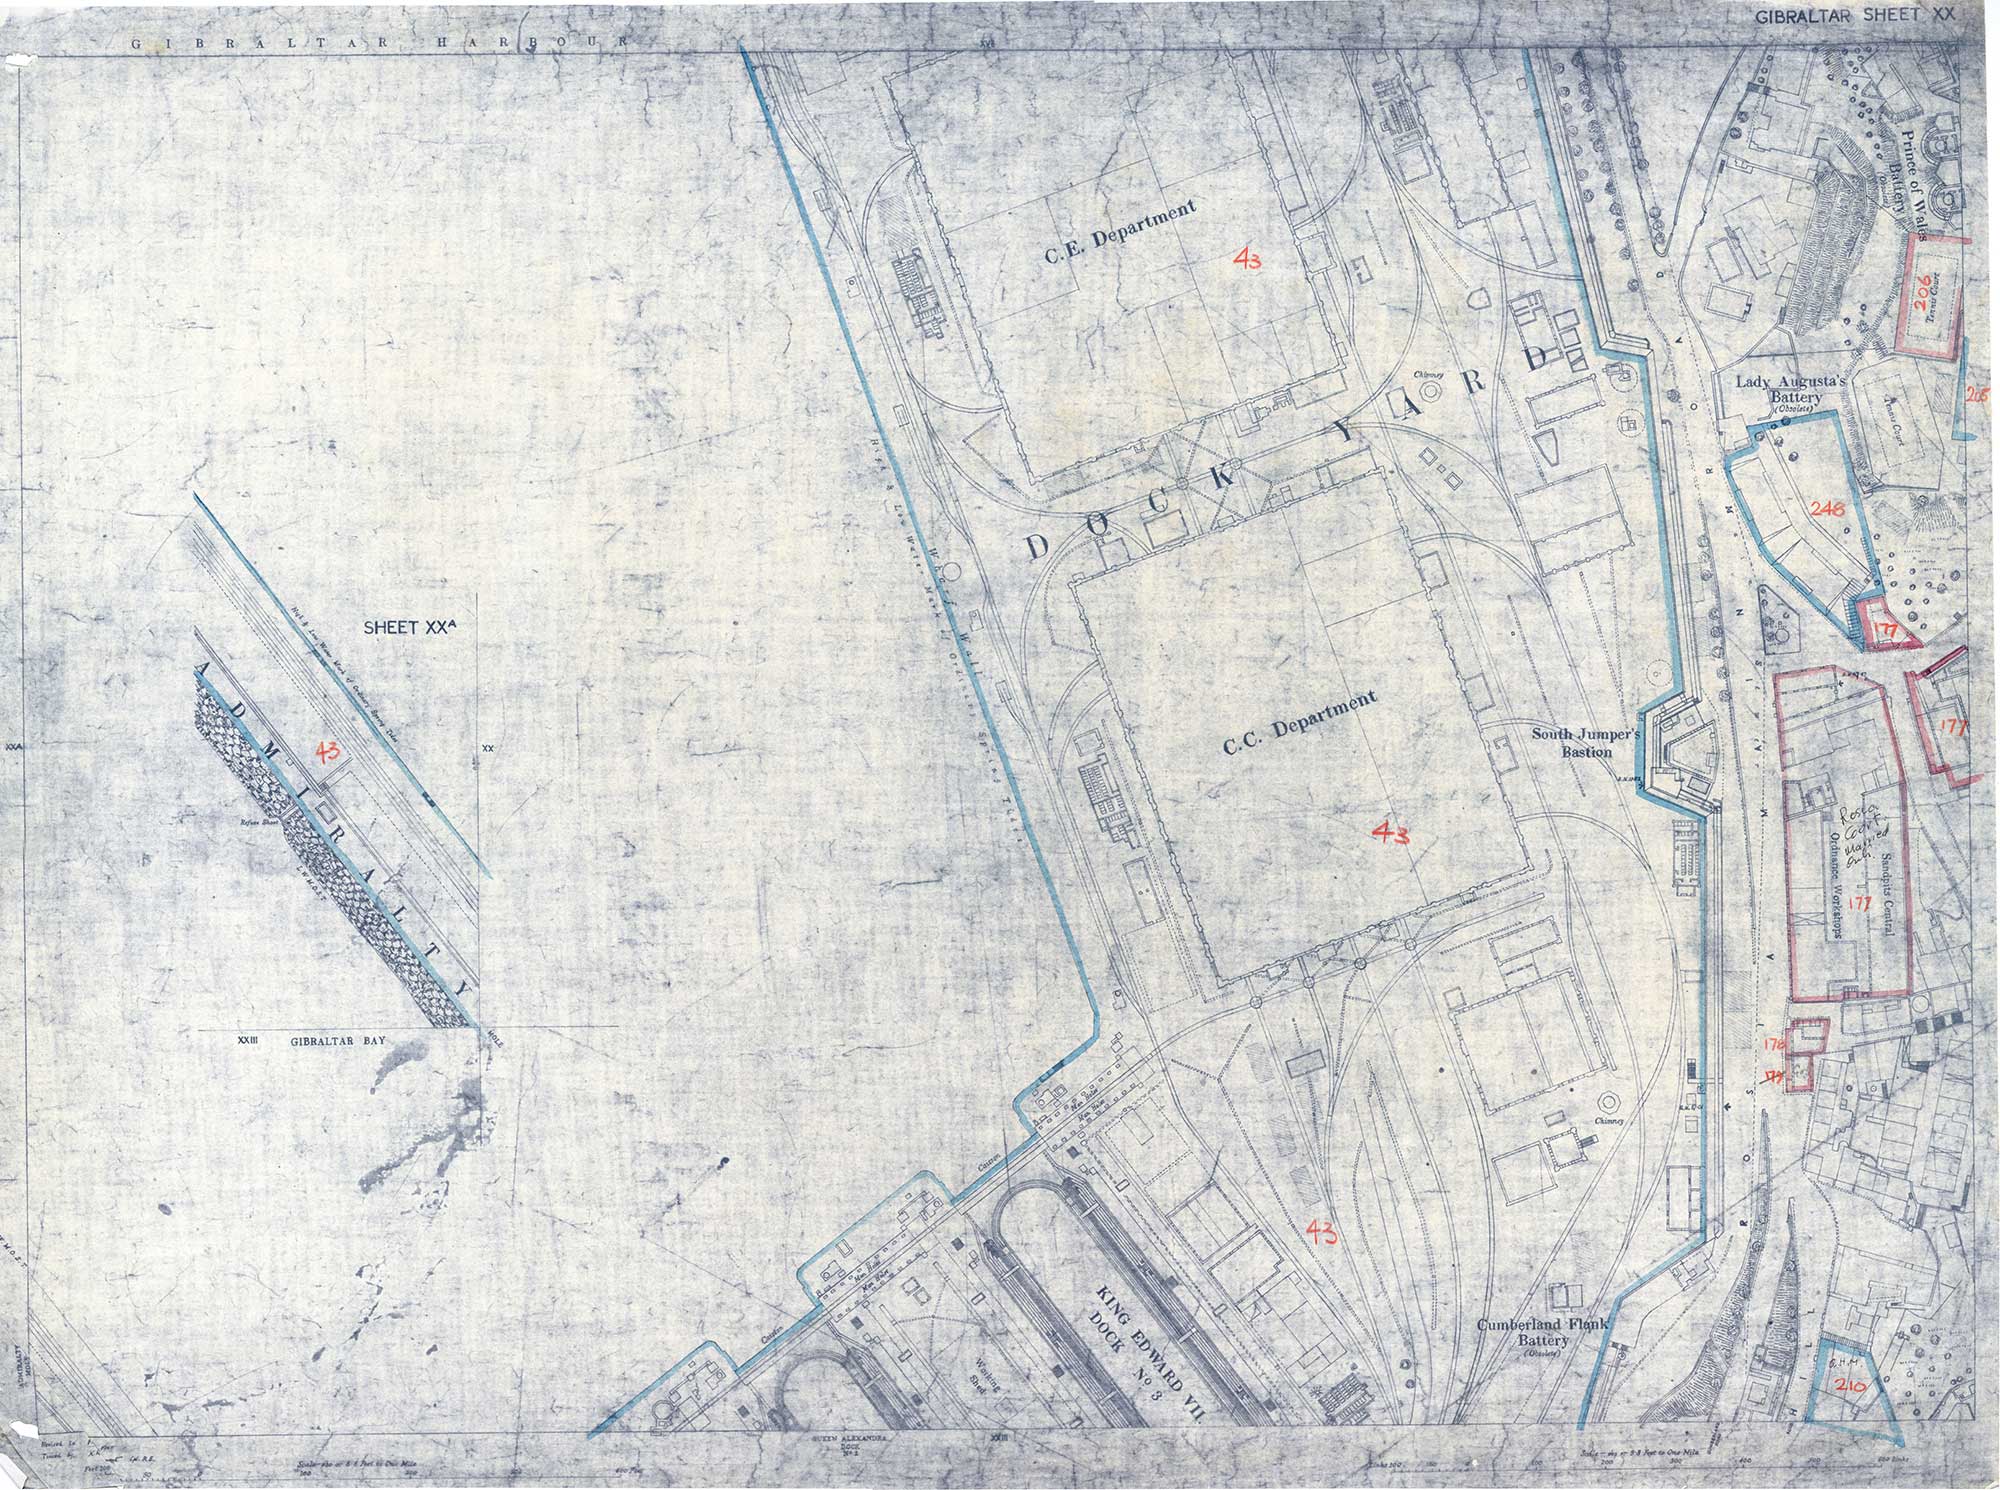 Map-20-OS-Sheet-20-Dockyard-South-Mole